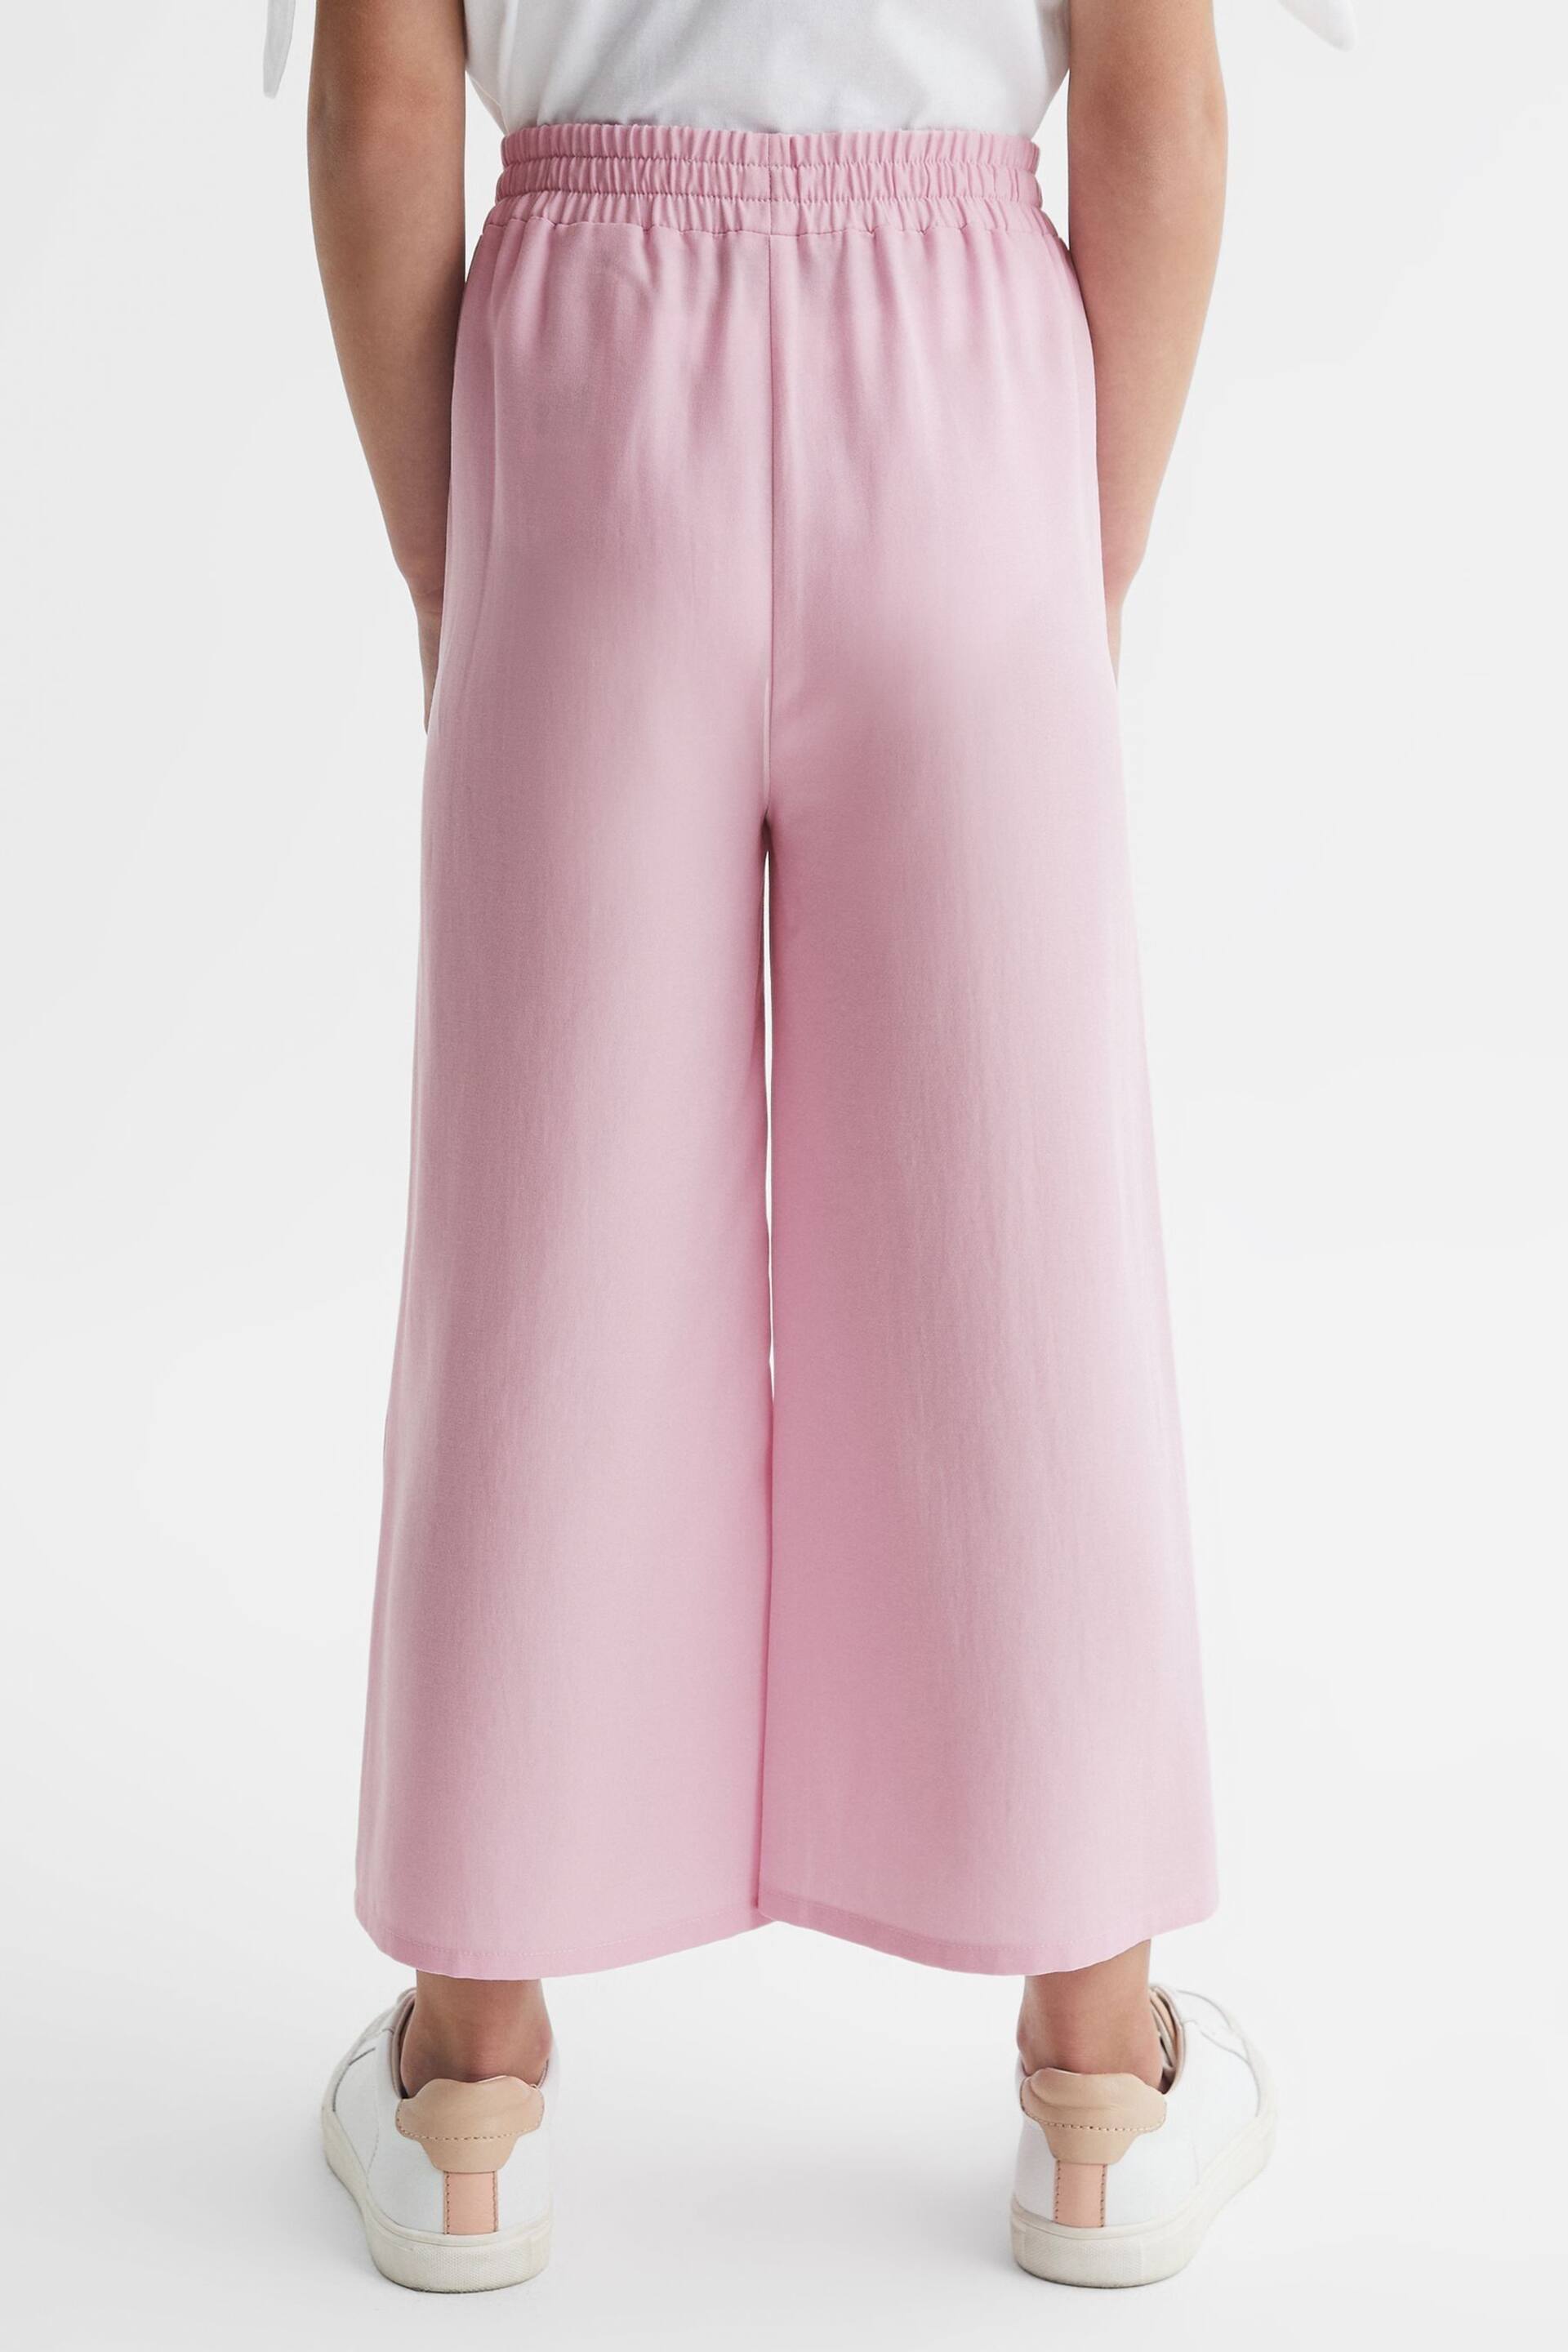 Reiss Pink Sienna Junior Wide Leg Side Slip Drawstring Trousers - Image 5 of 6